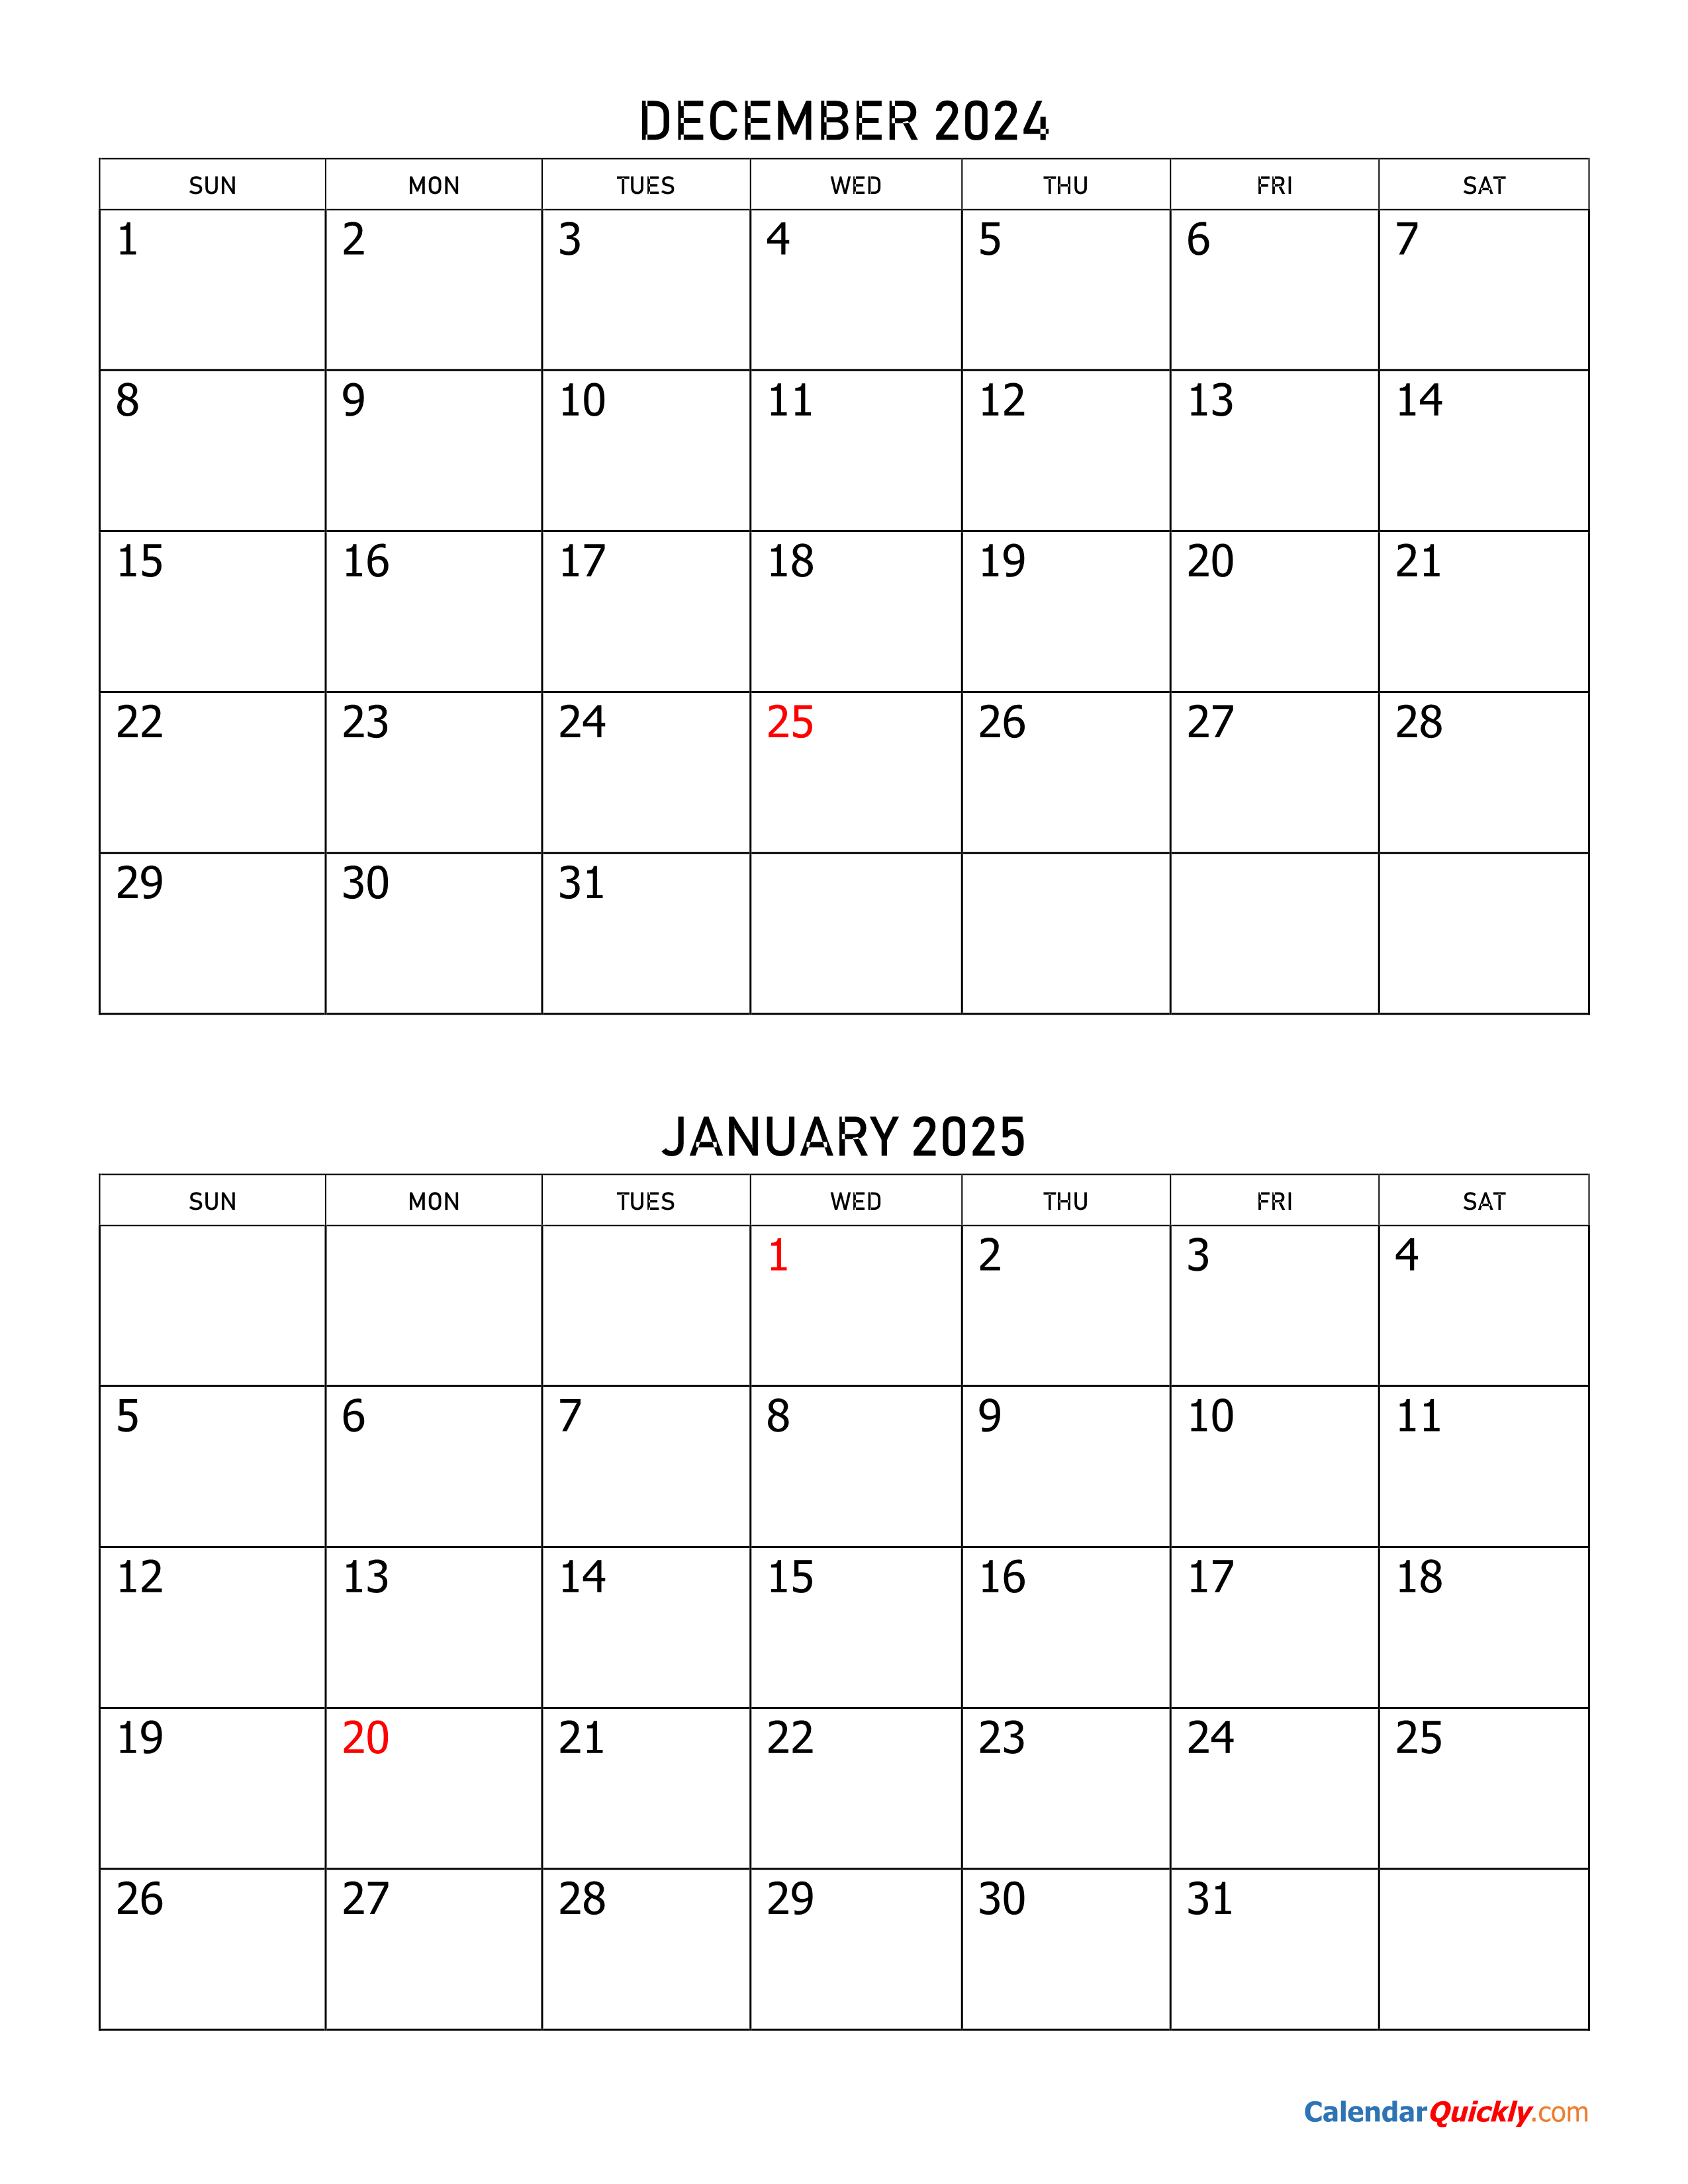 december-2024-and-january-2025-calendar-calendar-quickly